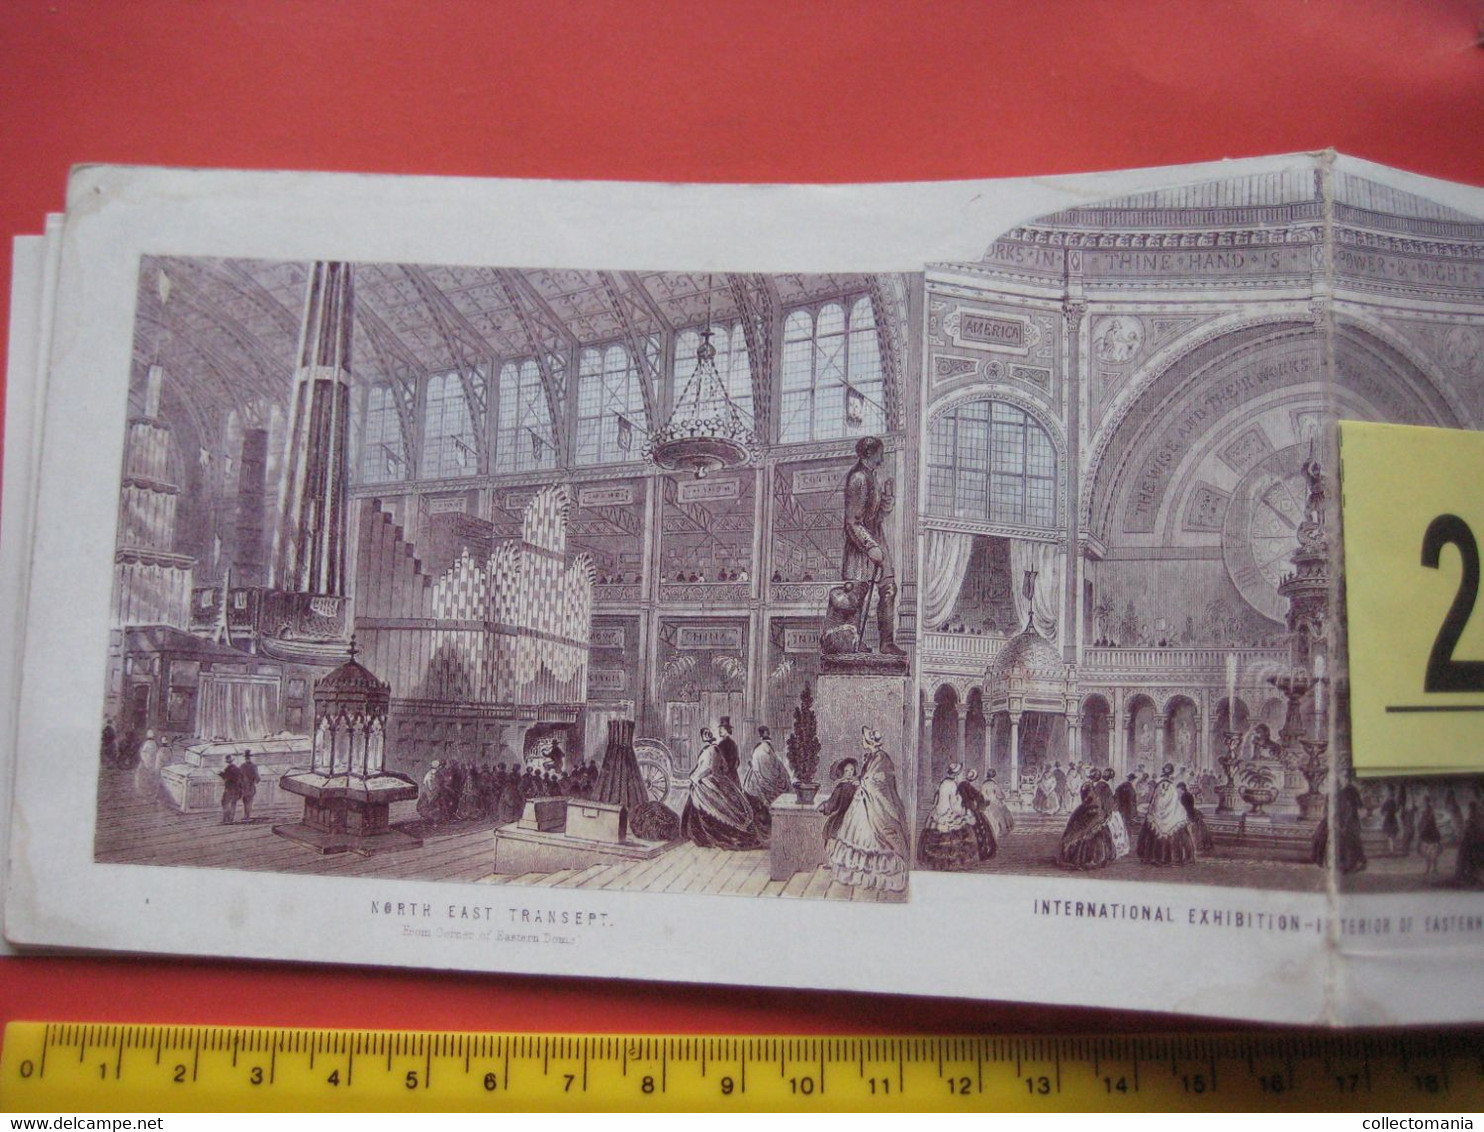 30 cards serie - fine quality litho prints (no postcards).  Het wereldberoemde  Chrystal Palace London anno 1867